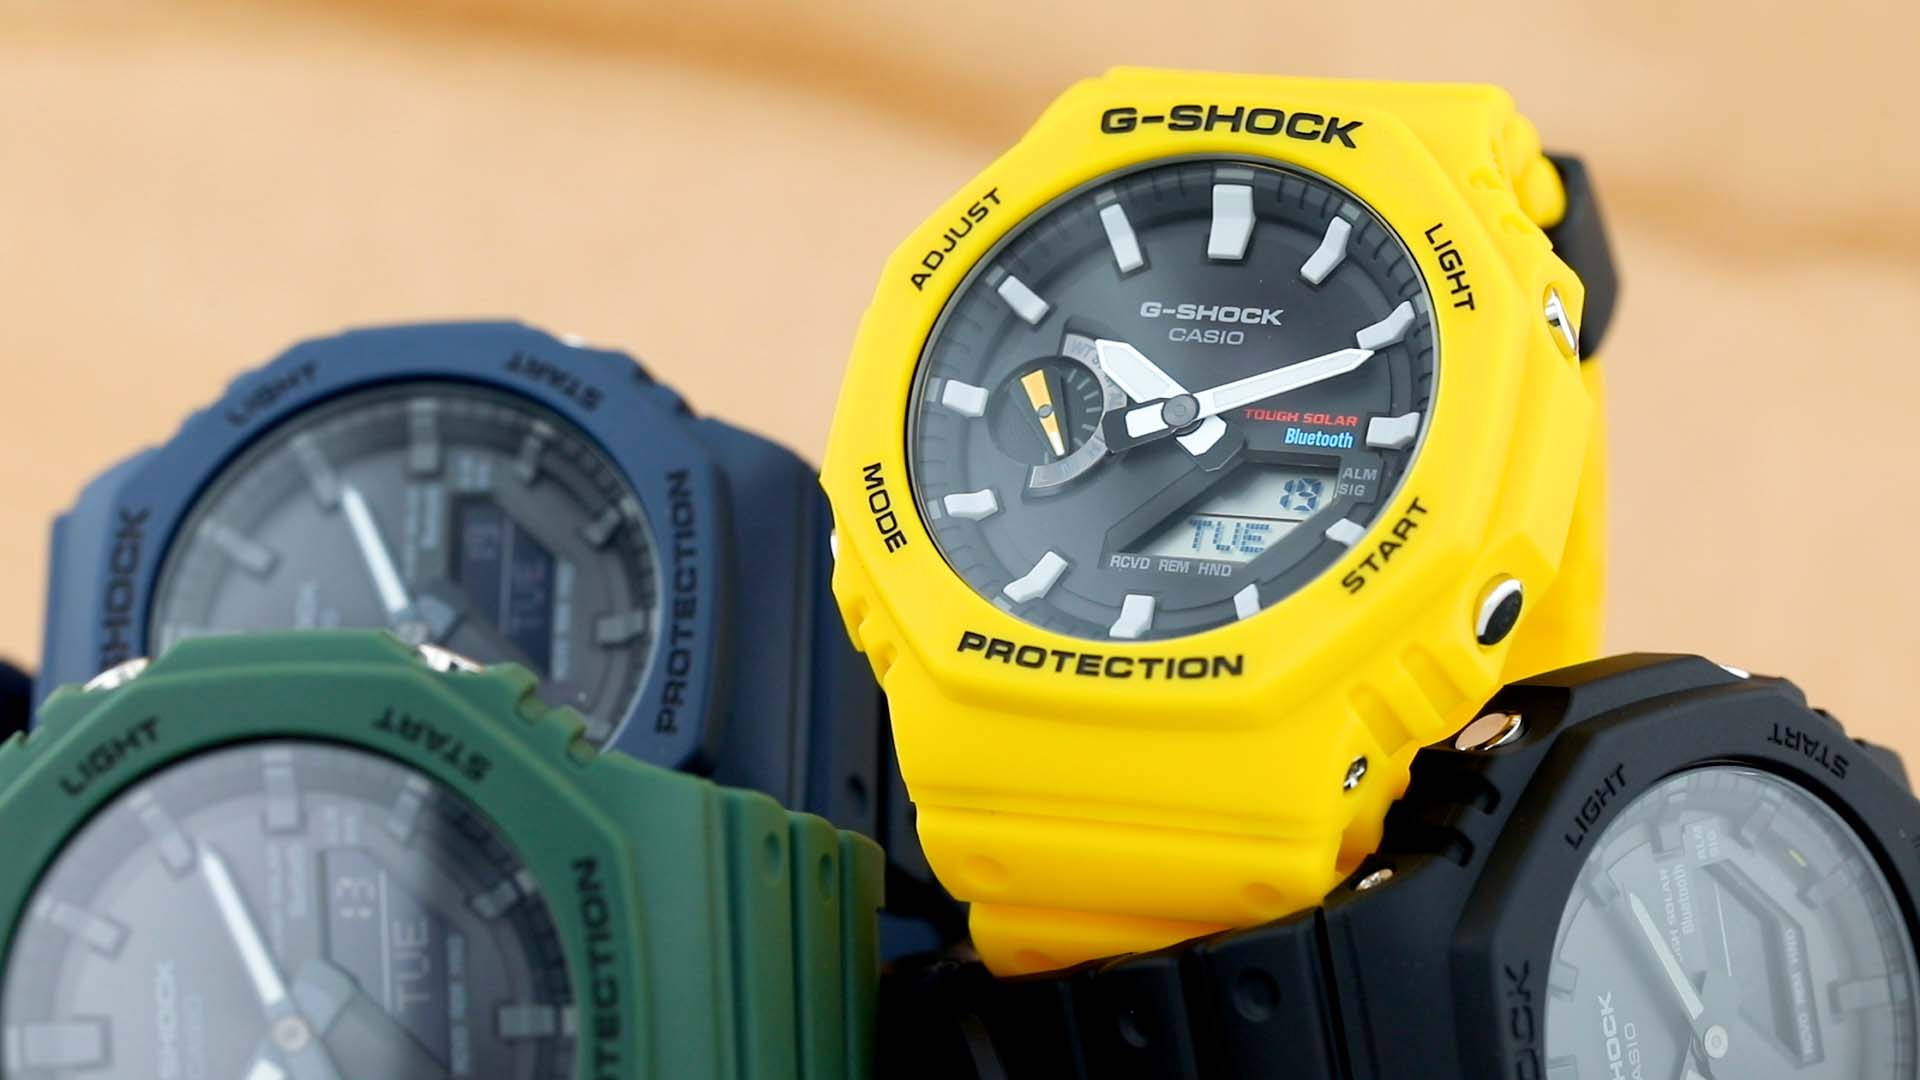 Introducing G-Shock's New CasiOak Solar + Bluetooth Models